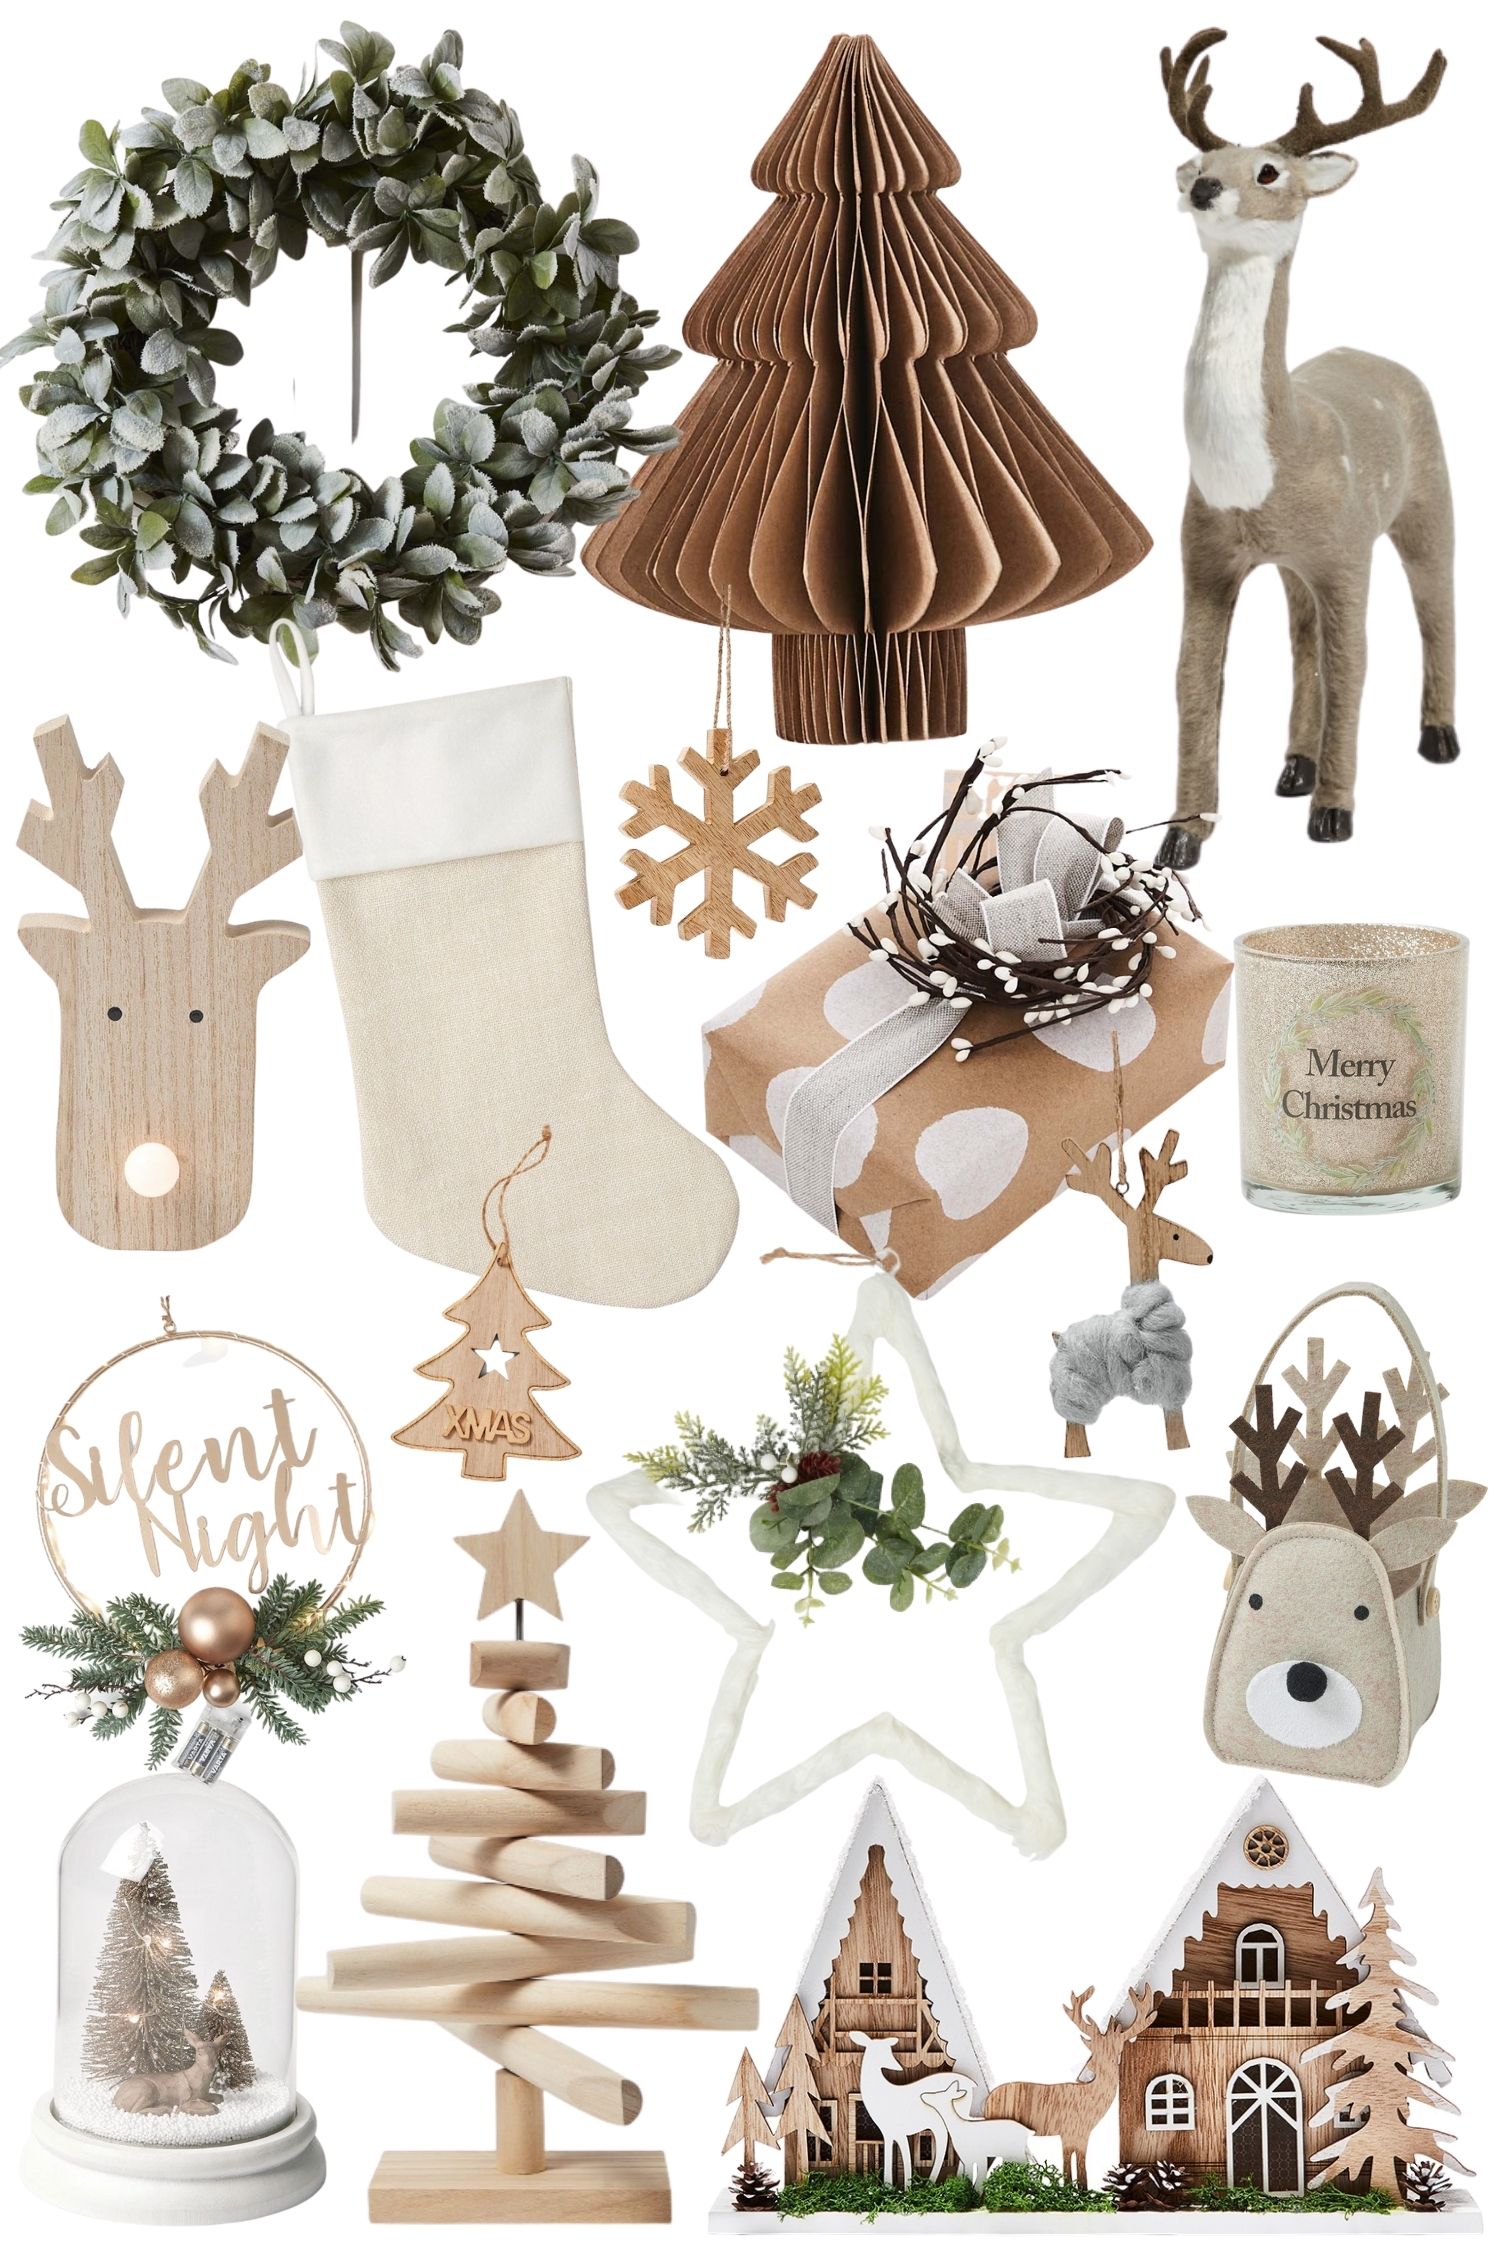 A Scandinavian Christmas tree - animal ornaments